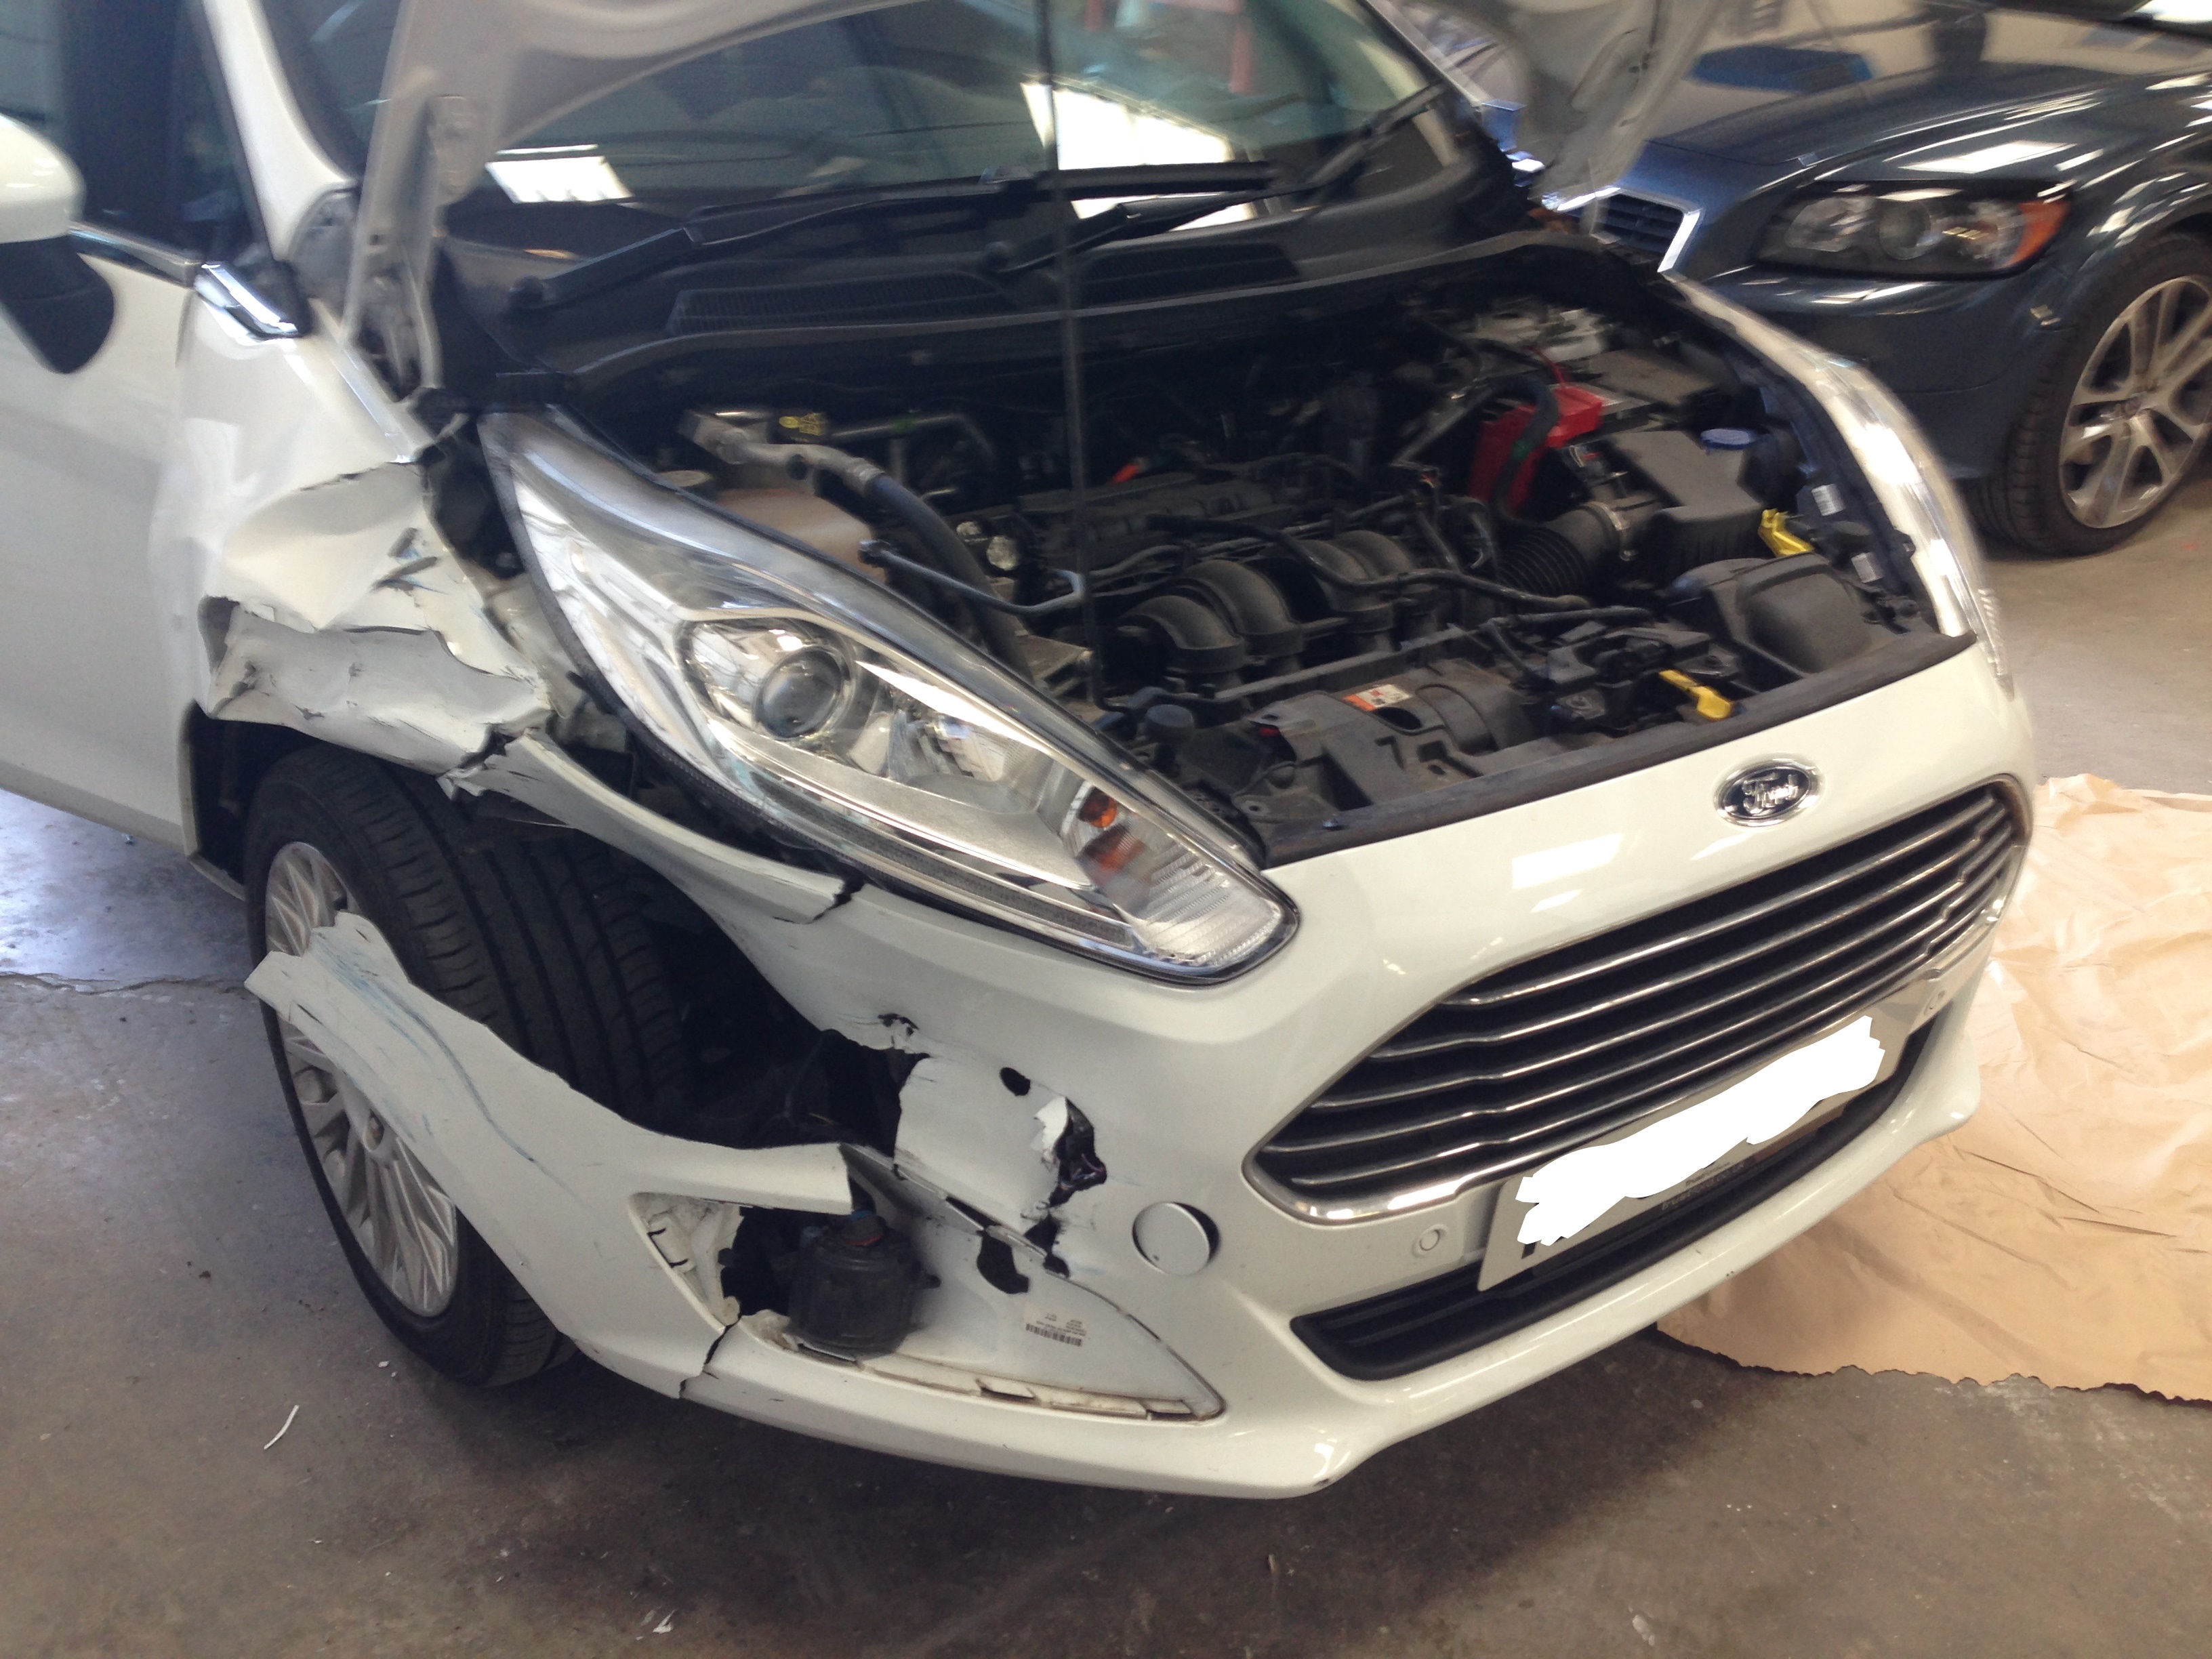 Ford Fiesta Damaged